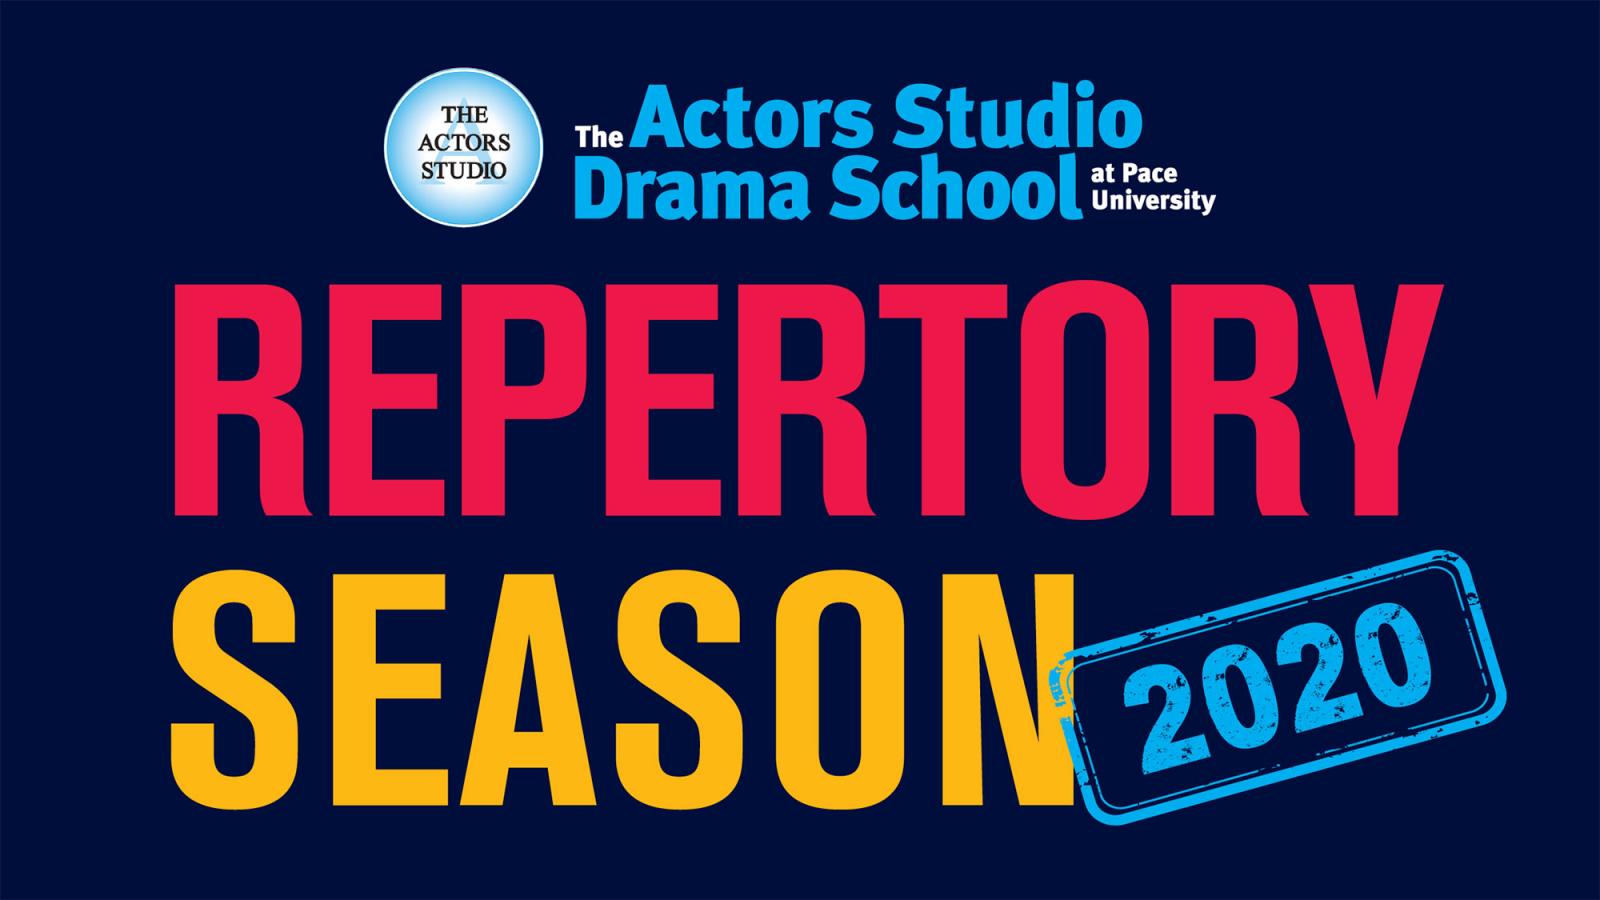 Image reads "Actor Studio Drama School - Repertory Season 2020"